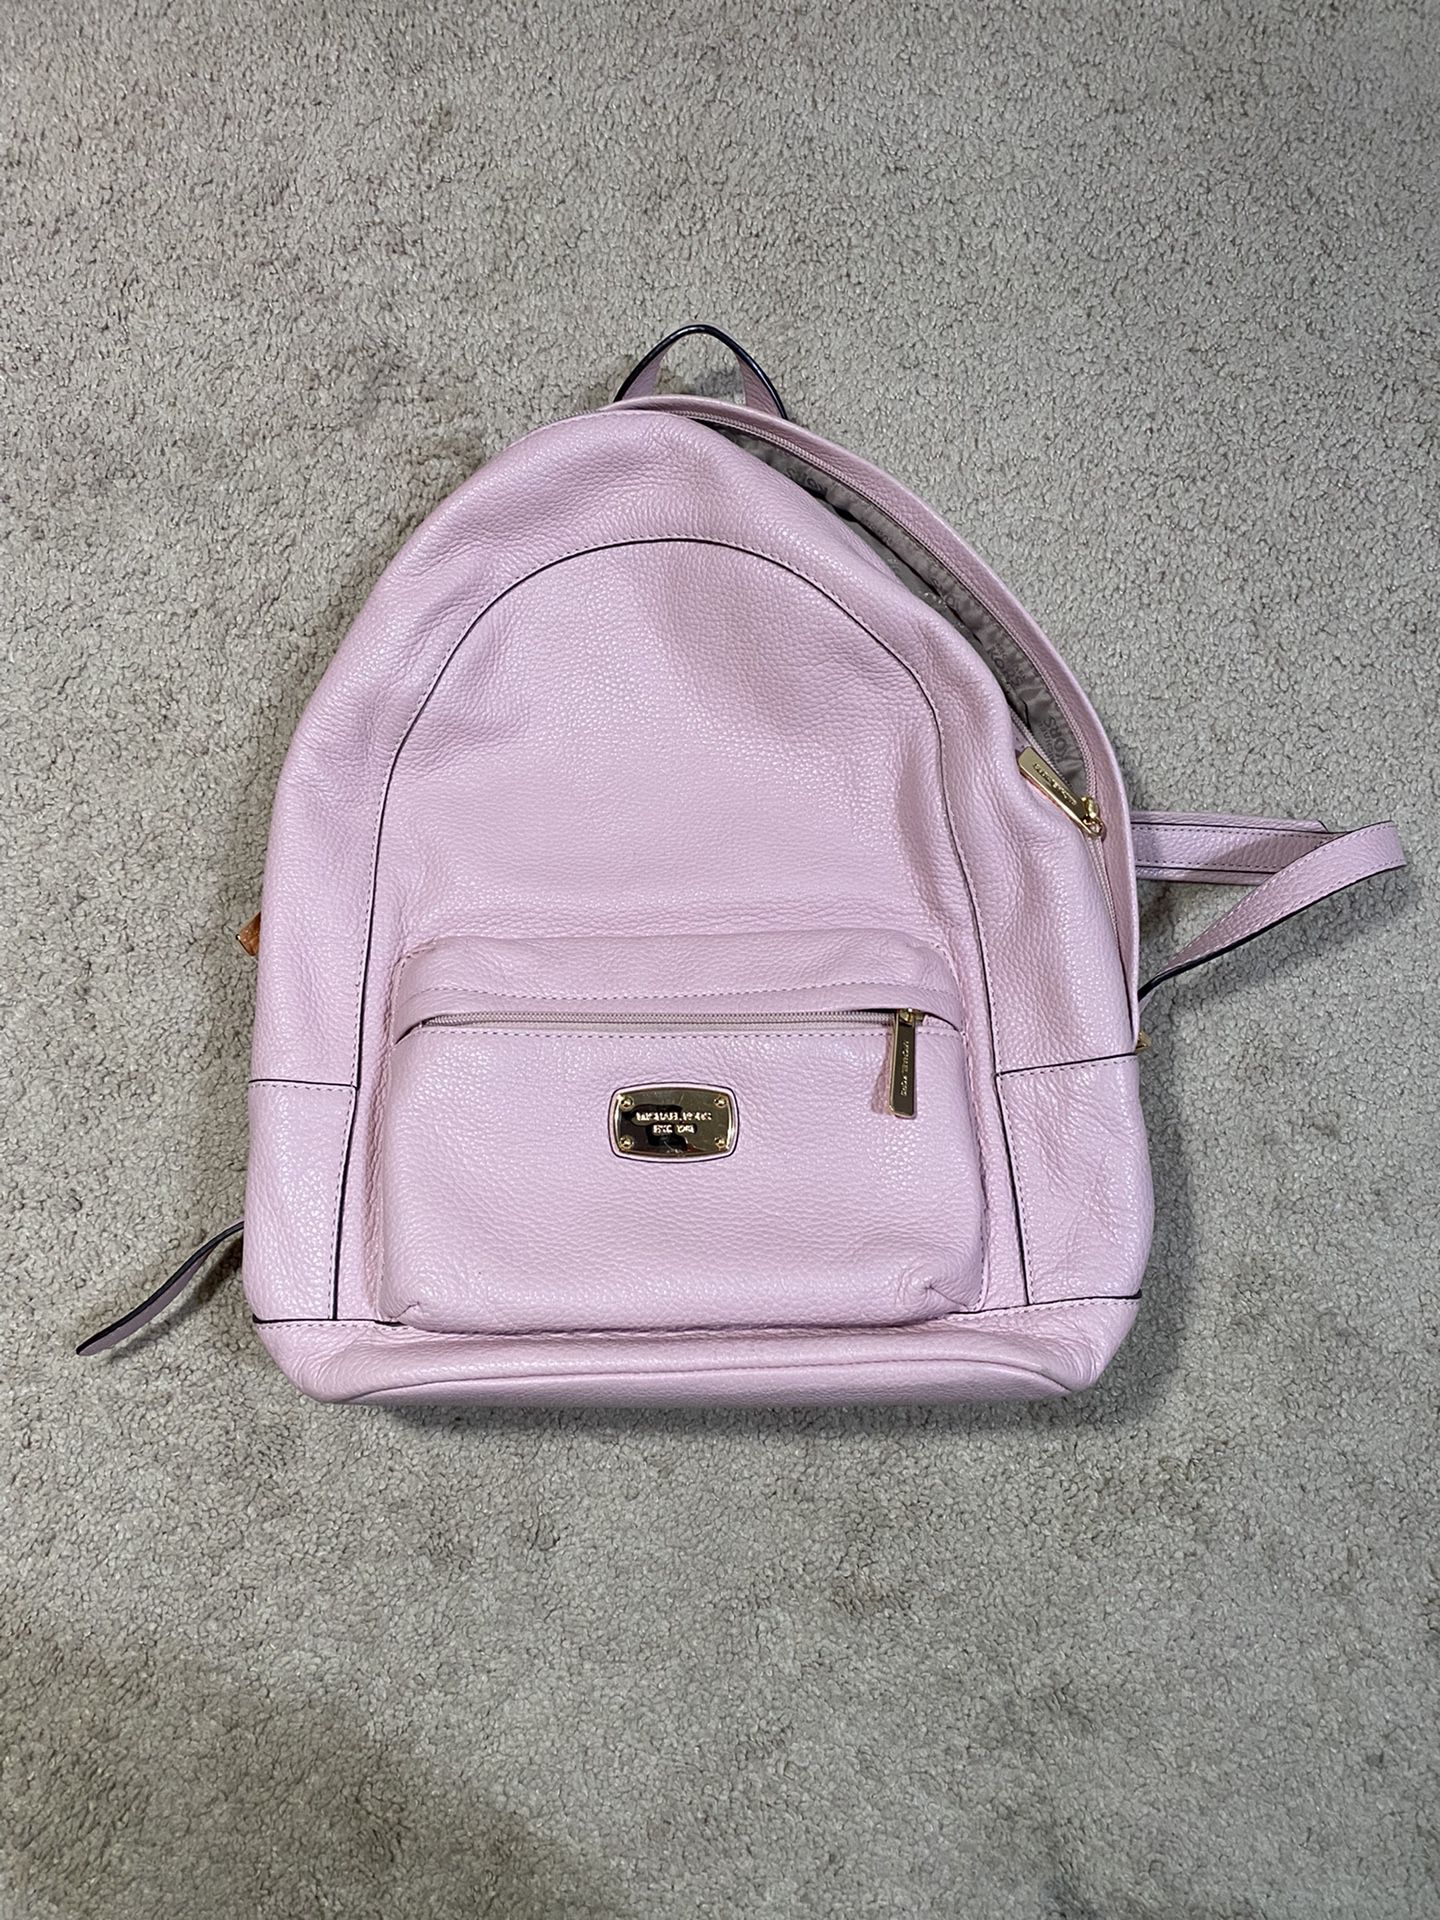 (SOLD) Michael Kors Backpack (Medium, Light Pink)